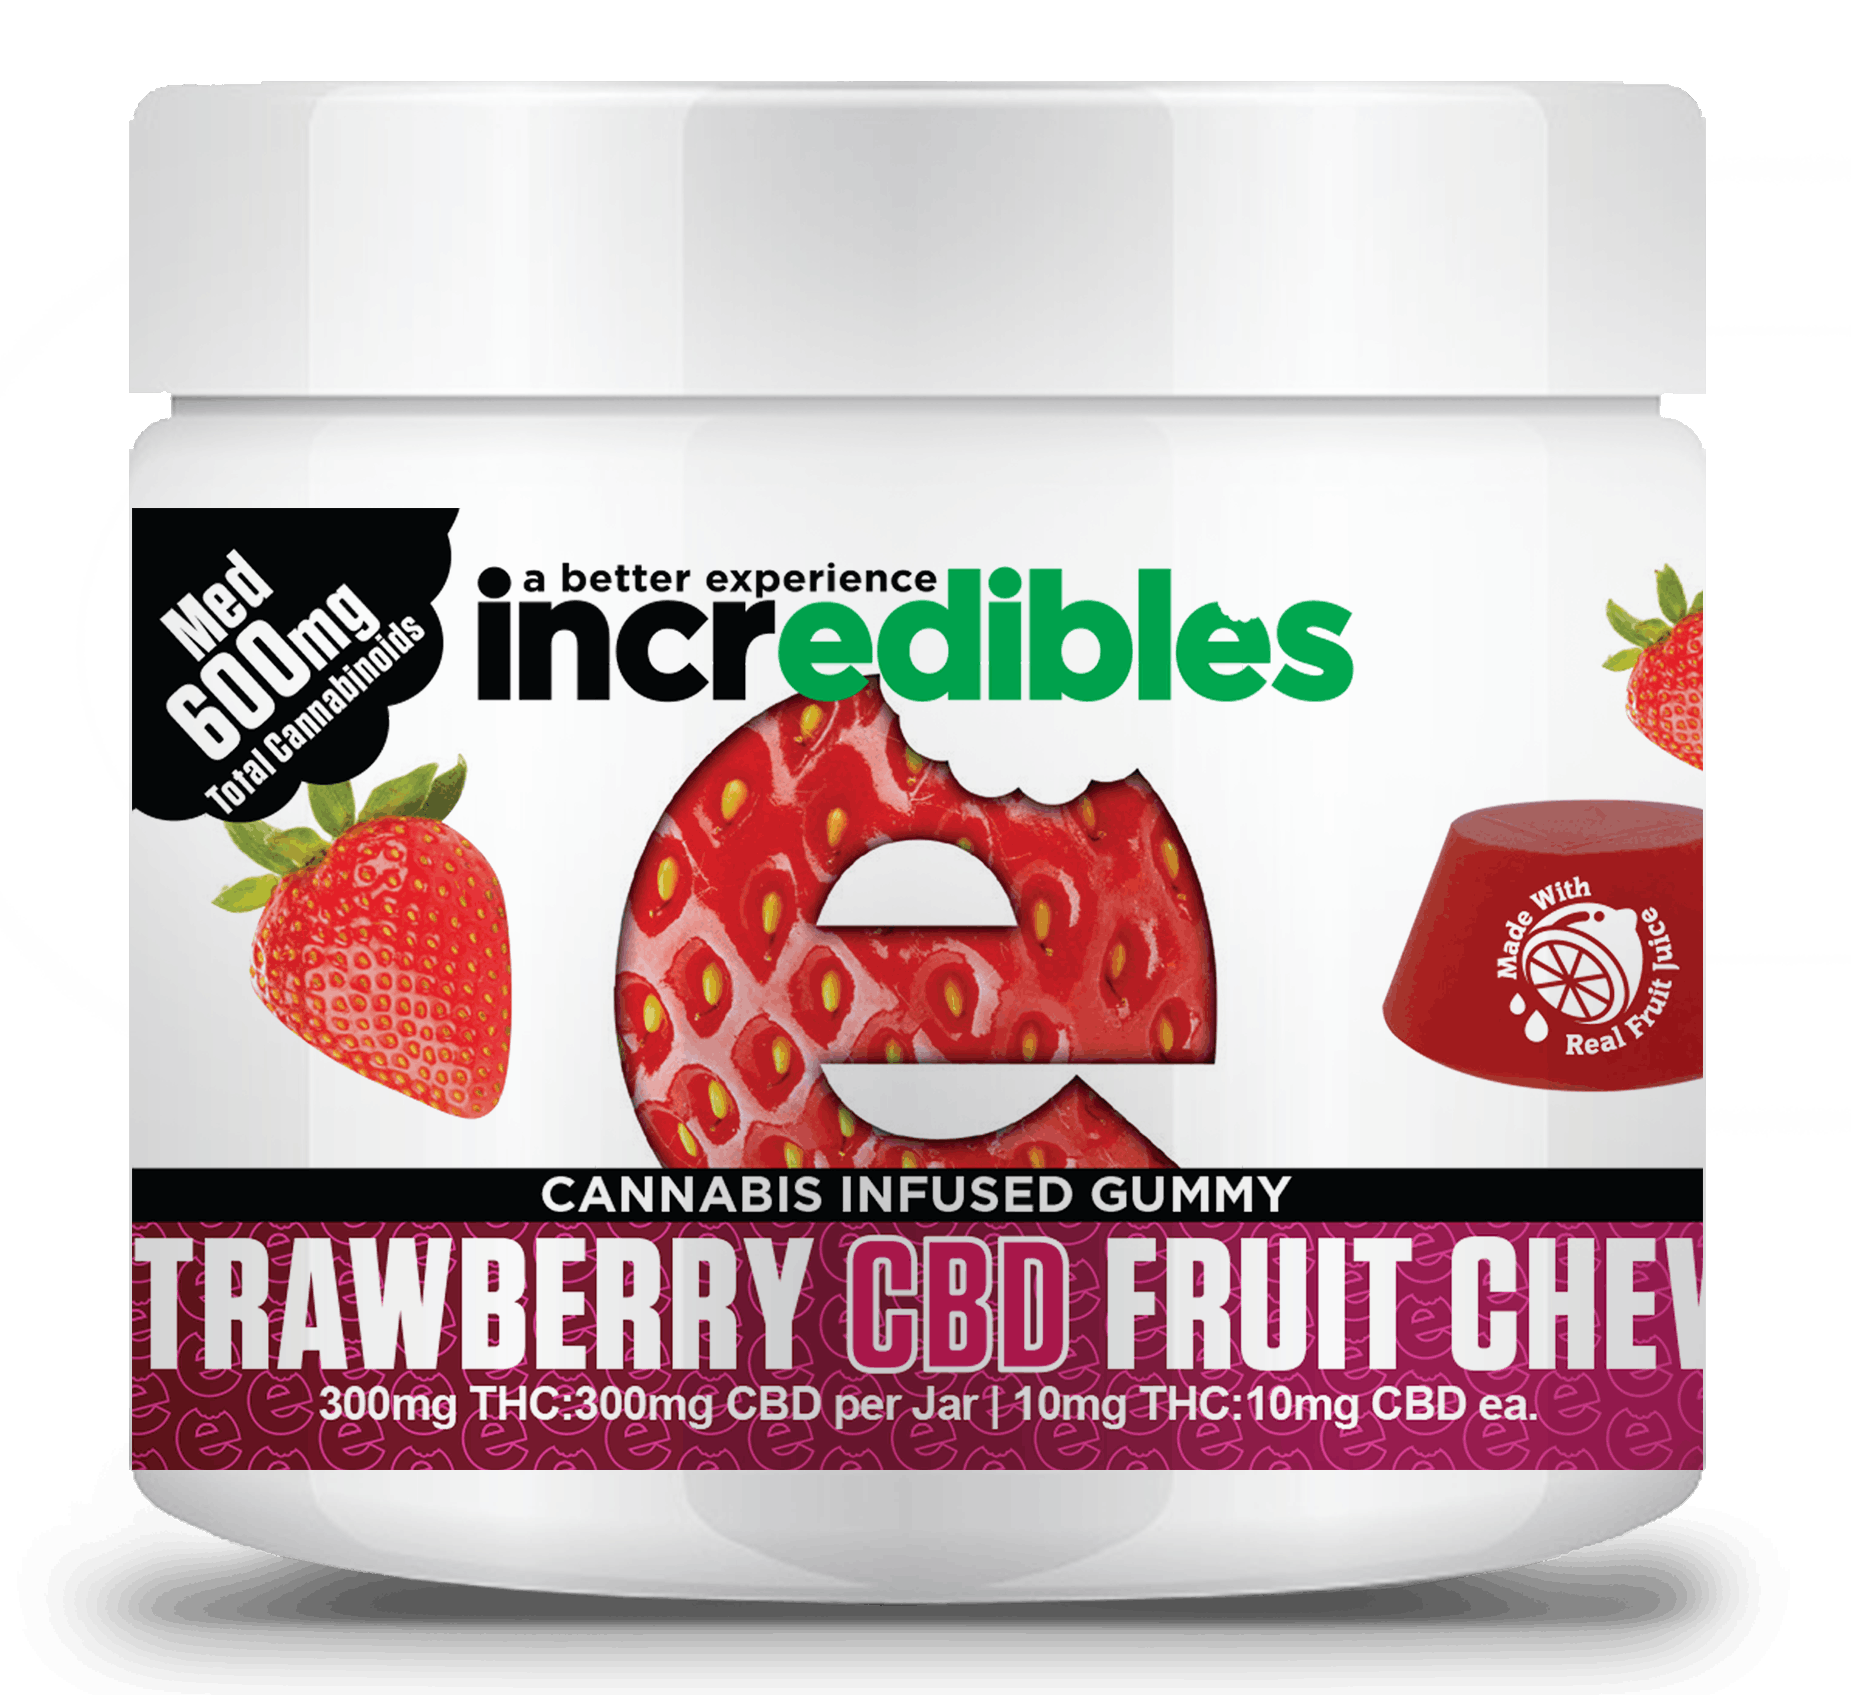 edible-incredibles-300mg-candy-strawberry-thc-cbd